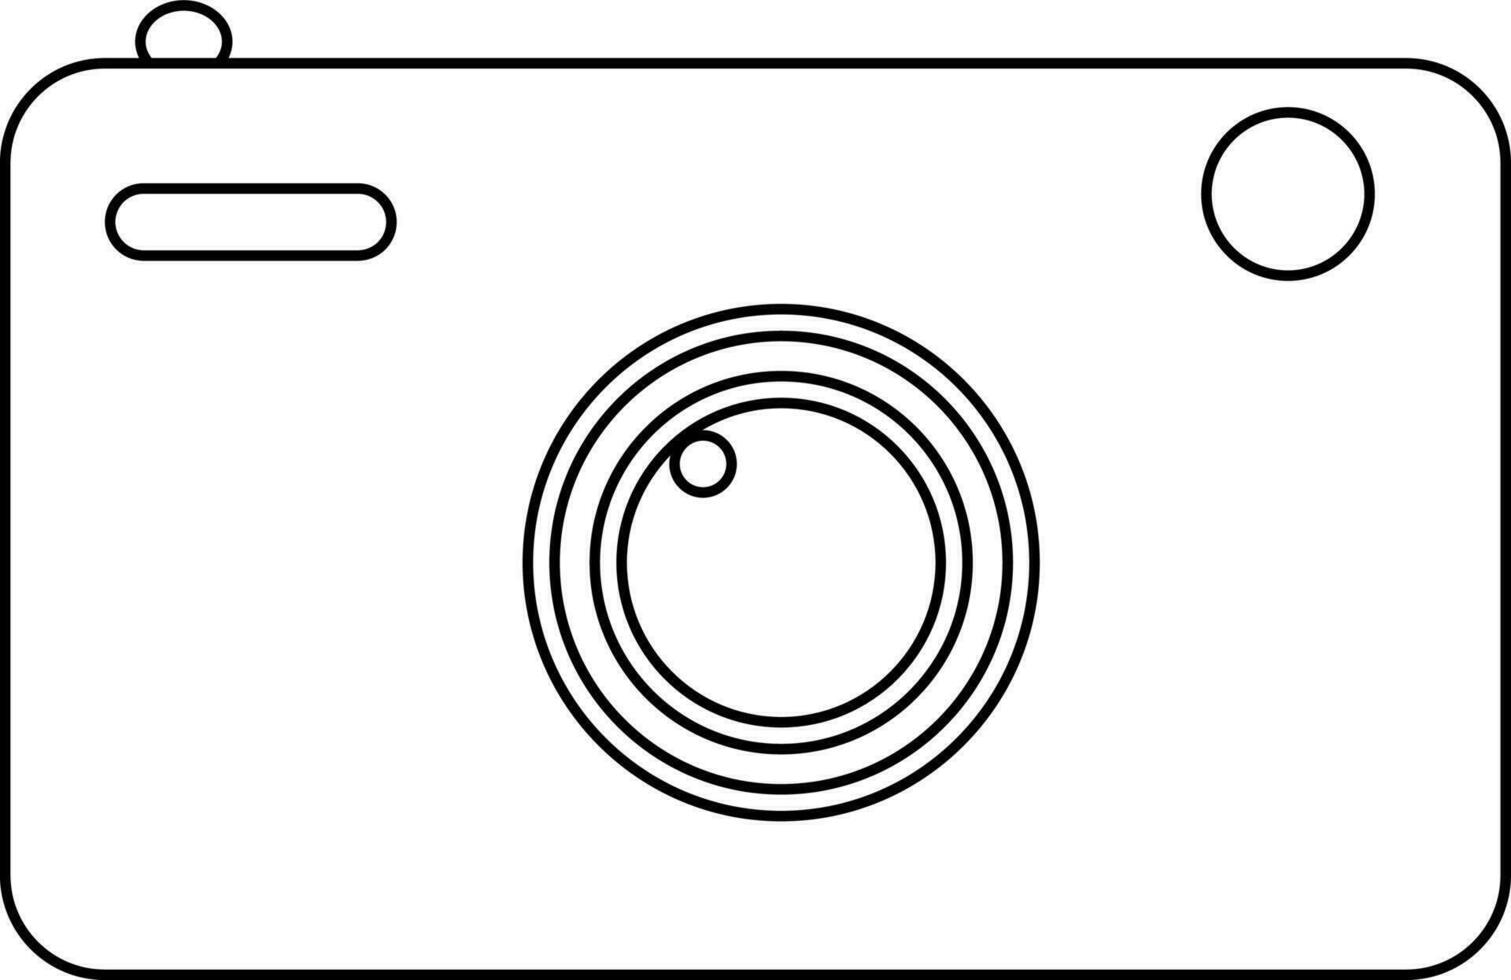 Flat style camera in line art illustration. vector